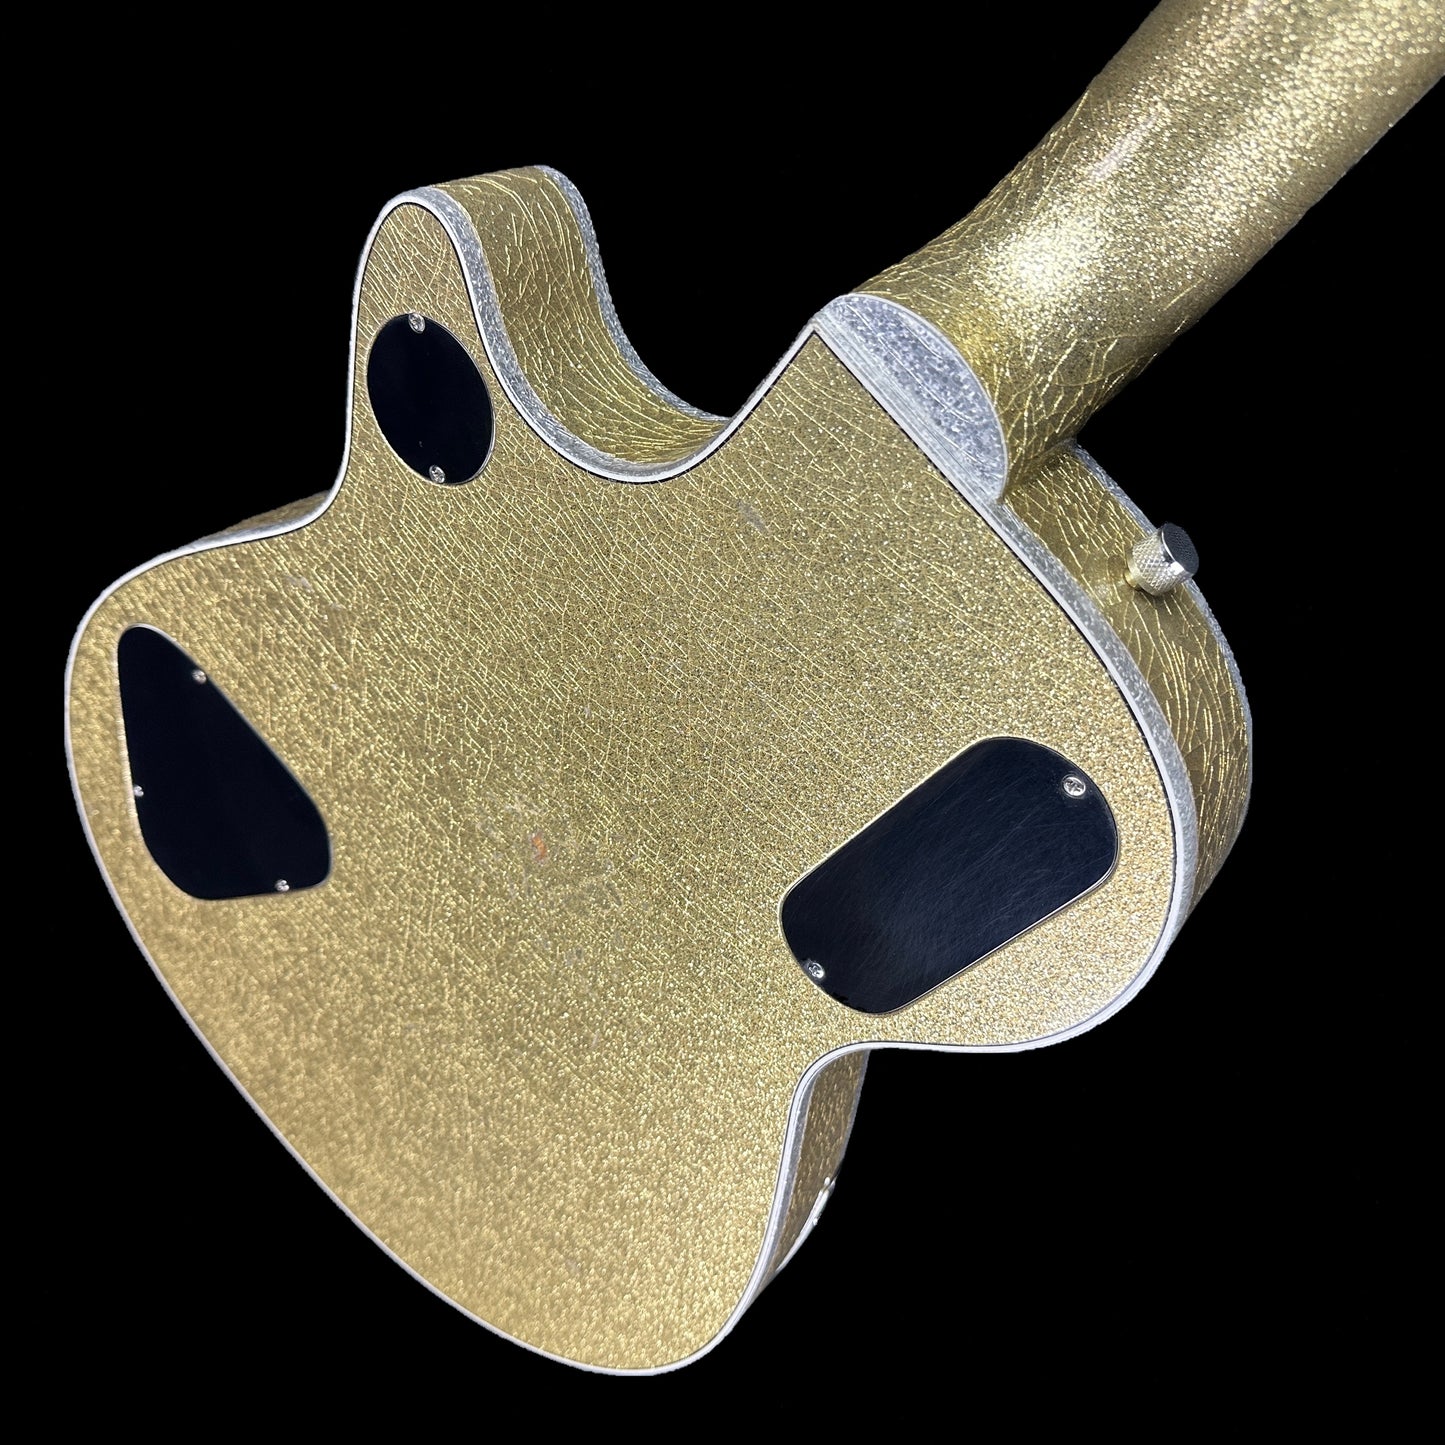 Back angle of Gretsch Custom Shop G6134CS-59 Penguin Gold Sparkle.